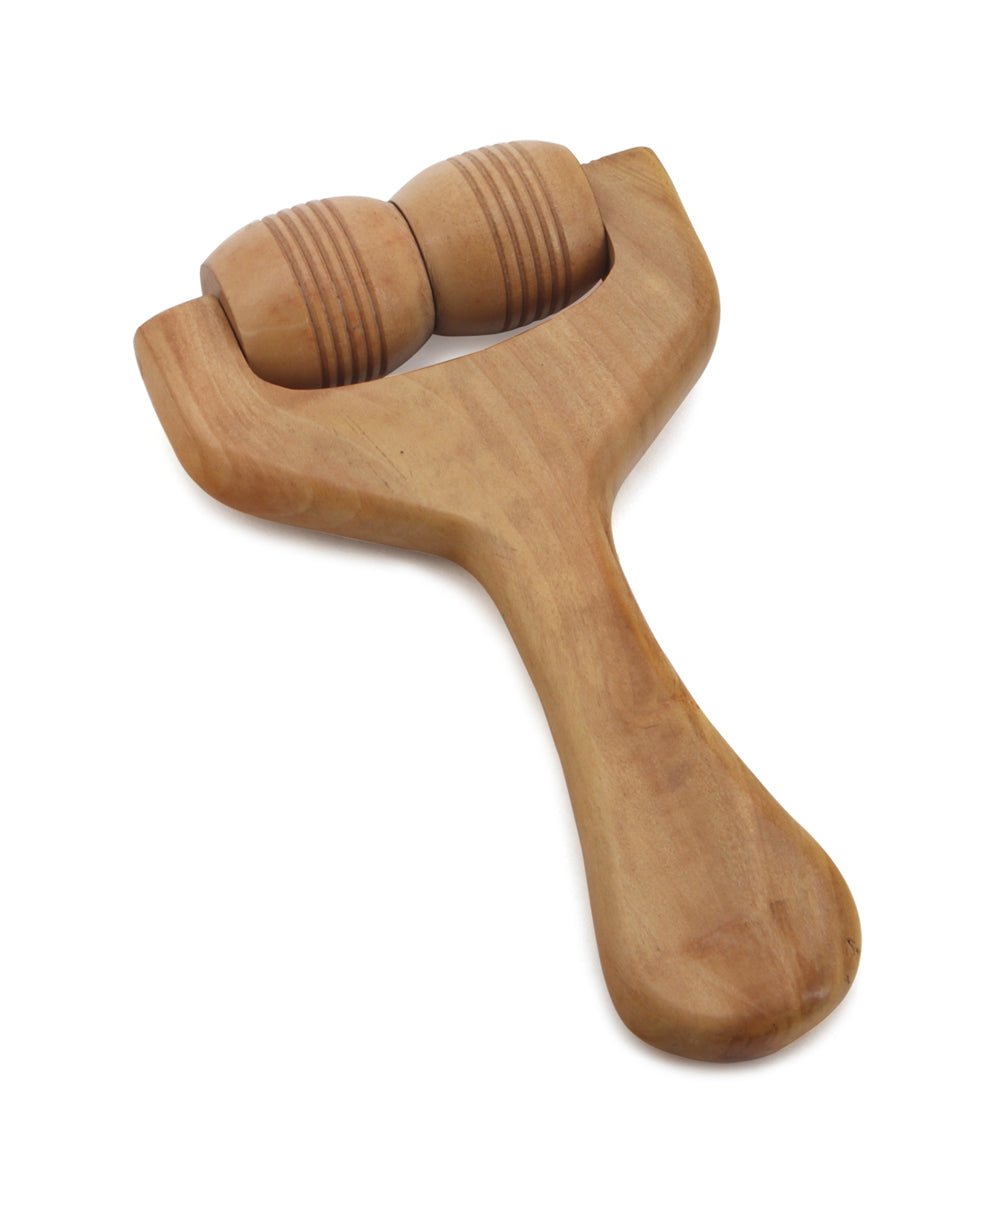 Fairtrade Handheld Wood Body Roller Massager - Manual Massage Tools